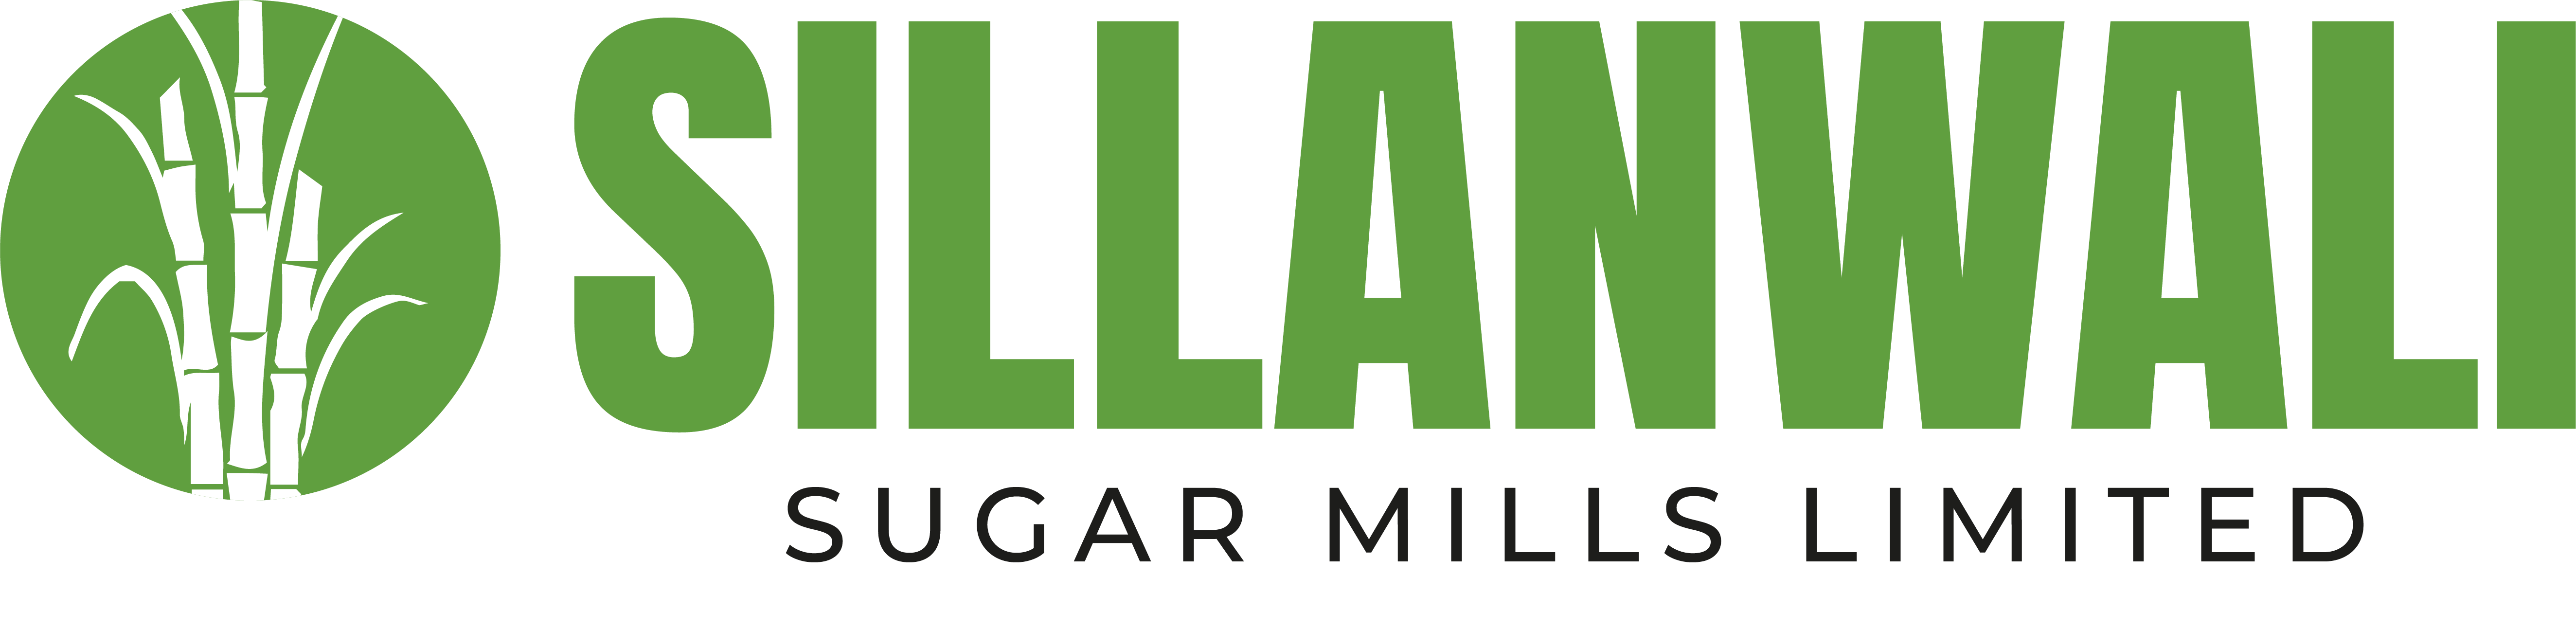 SillanWali Sugar Mills